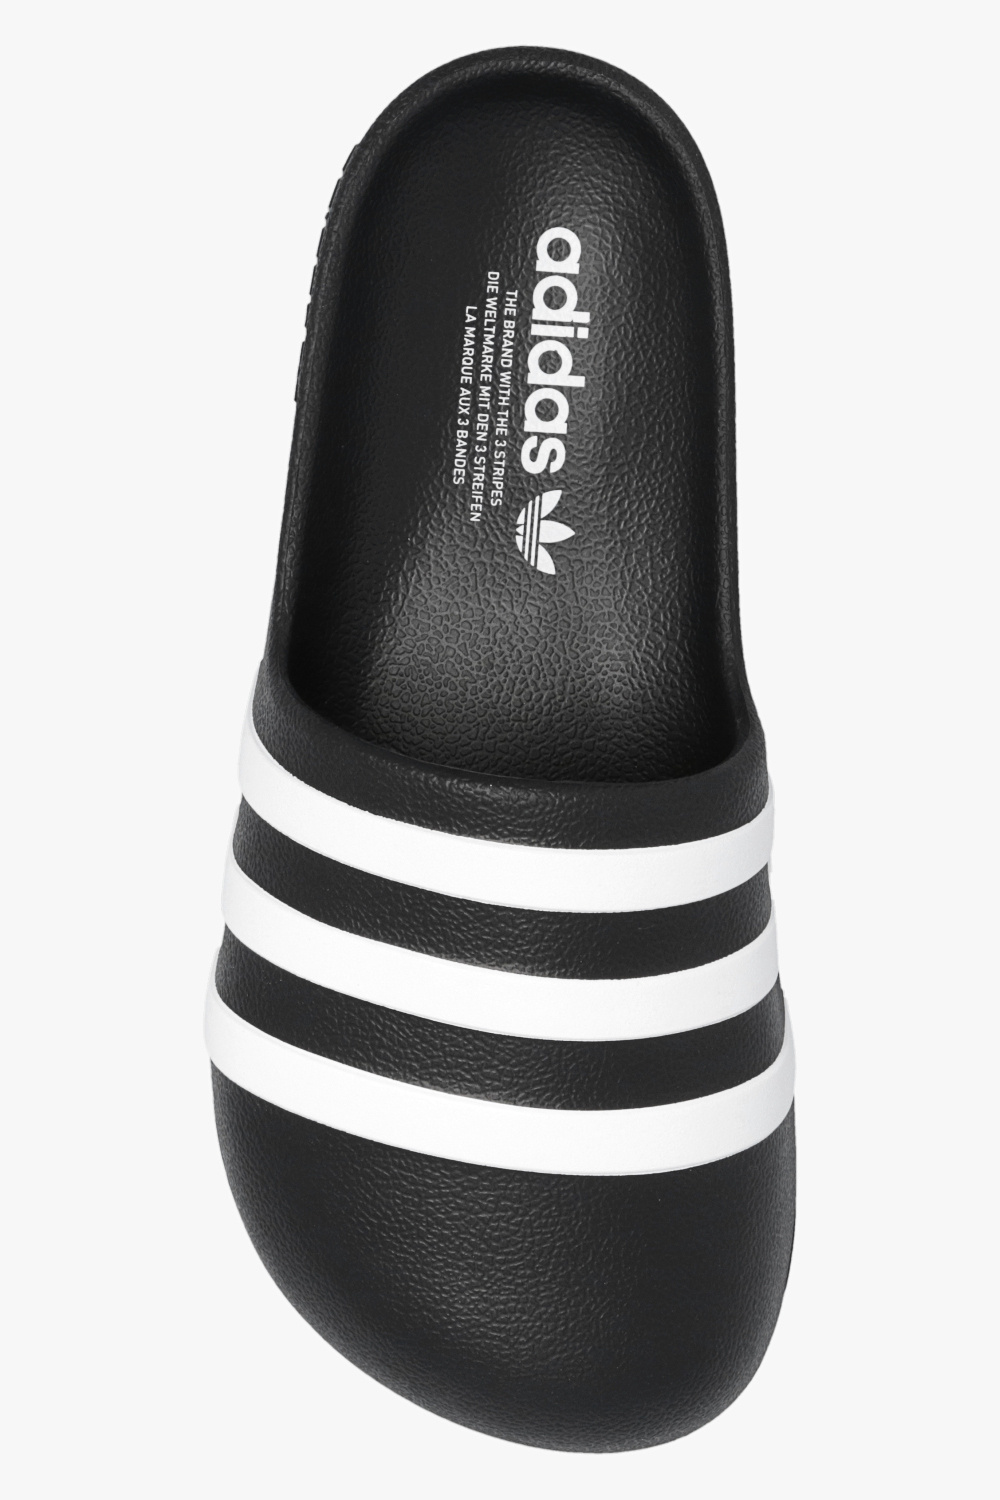 De-iceShops Black Adilette' slides ADIDAS Originals - Adidas zx 700 hd shoes cloud white core black beam orange gv8874